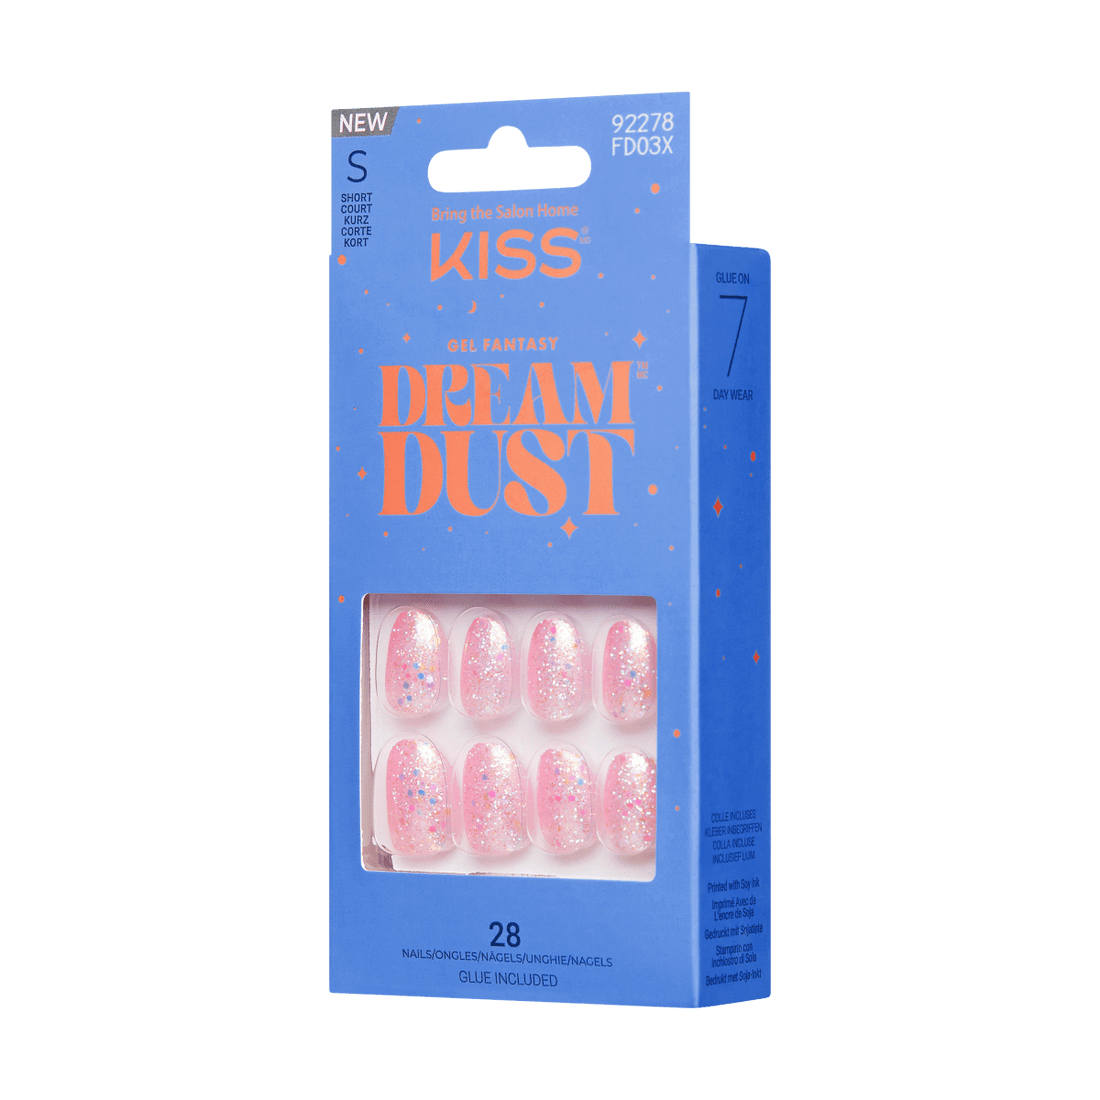 KISS Gel Fantasy Dreamdust, Press-On Nails, Coffee Date, Pink, Short Oval, 28ct